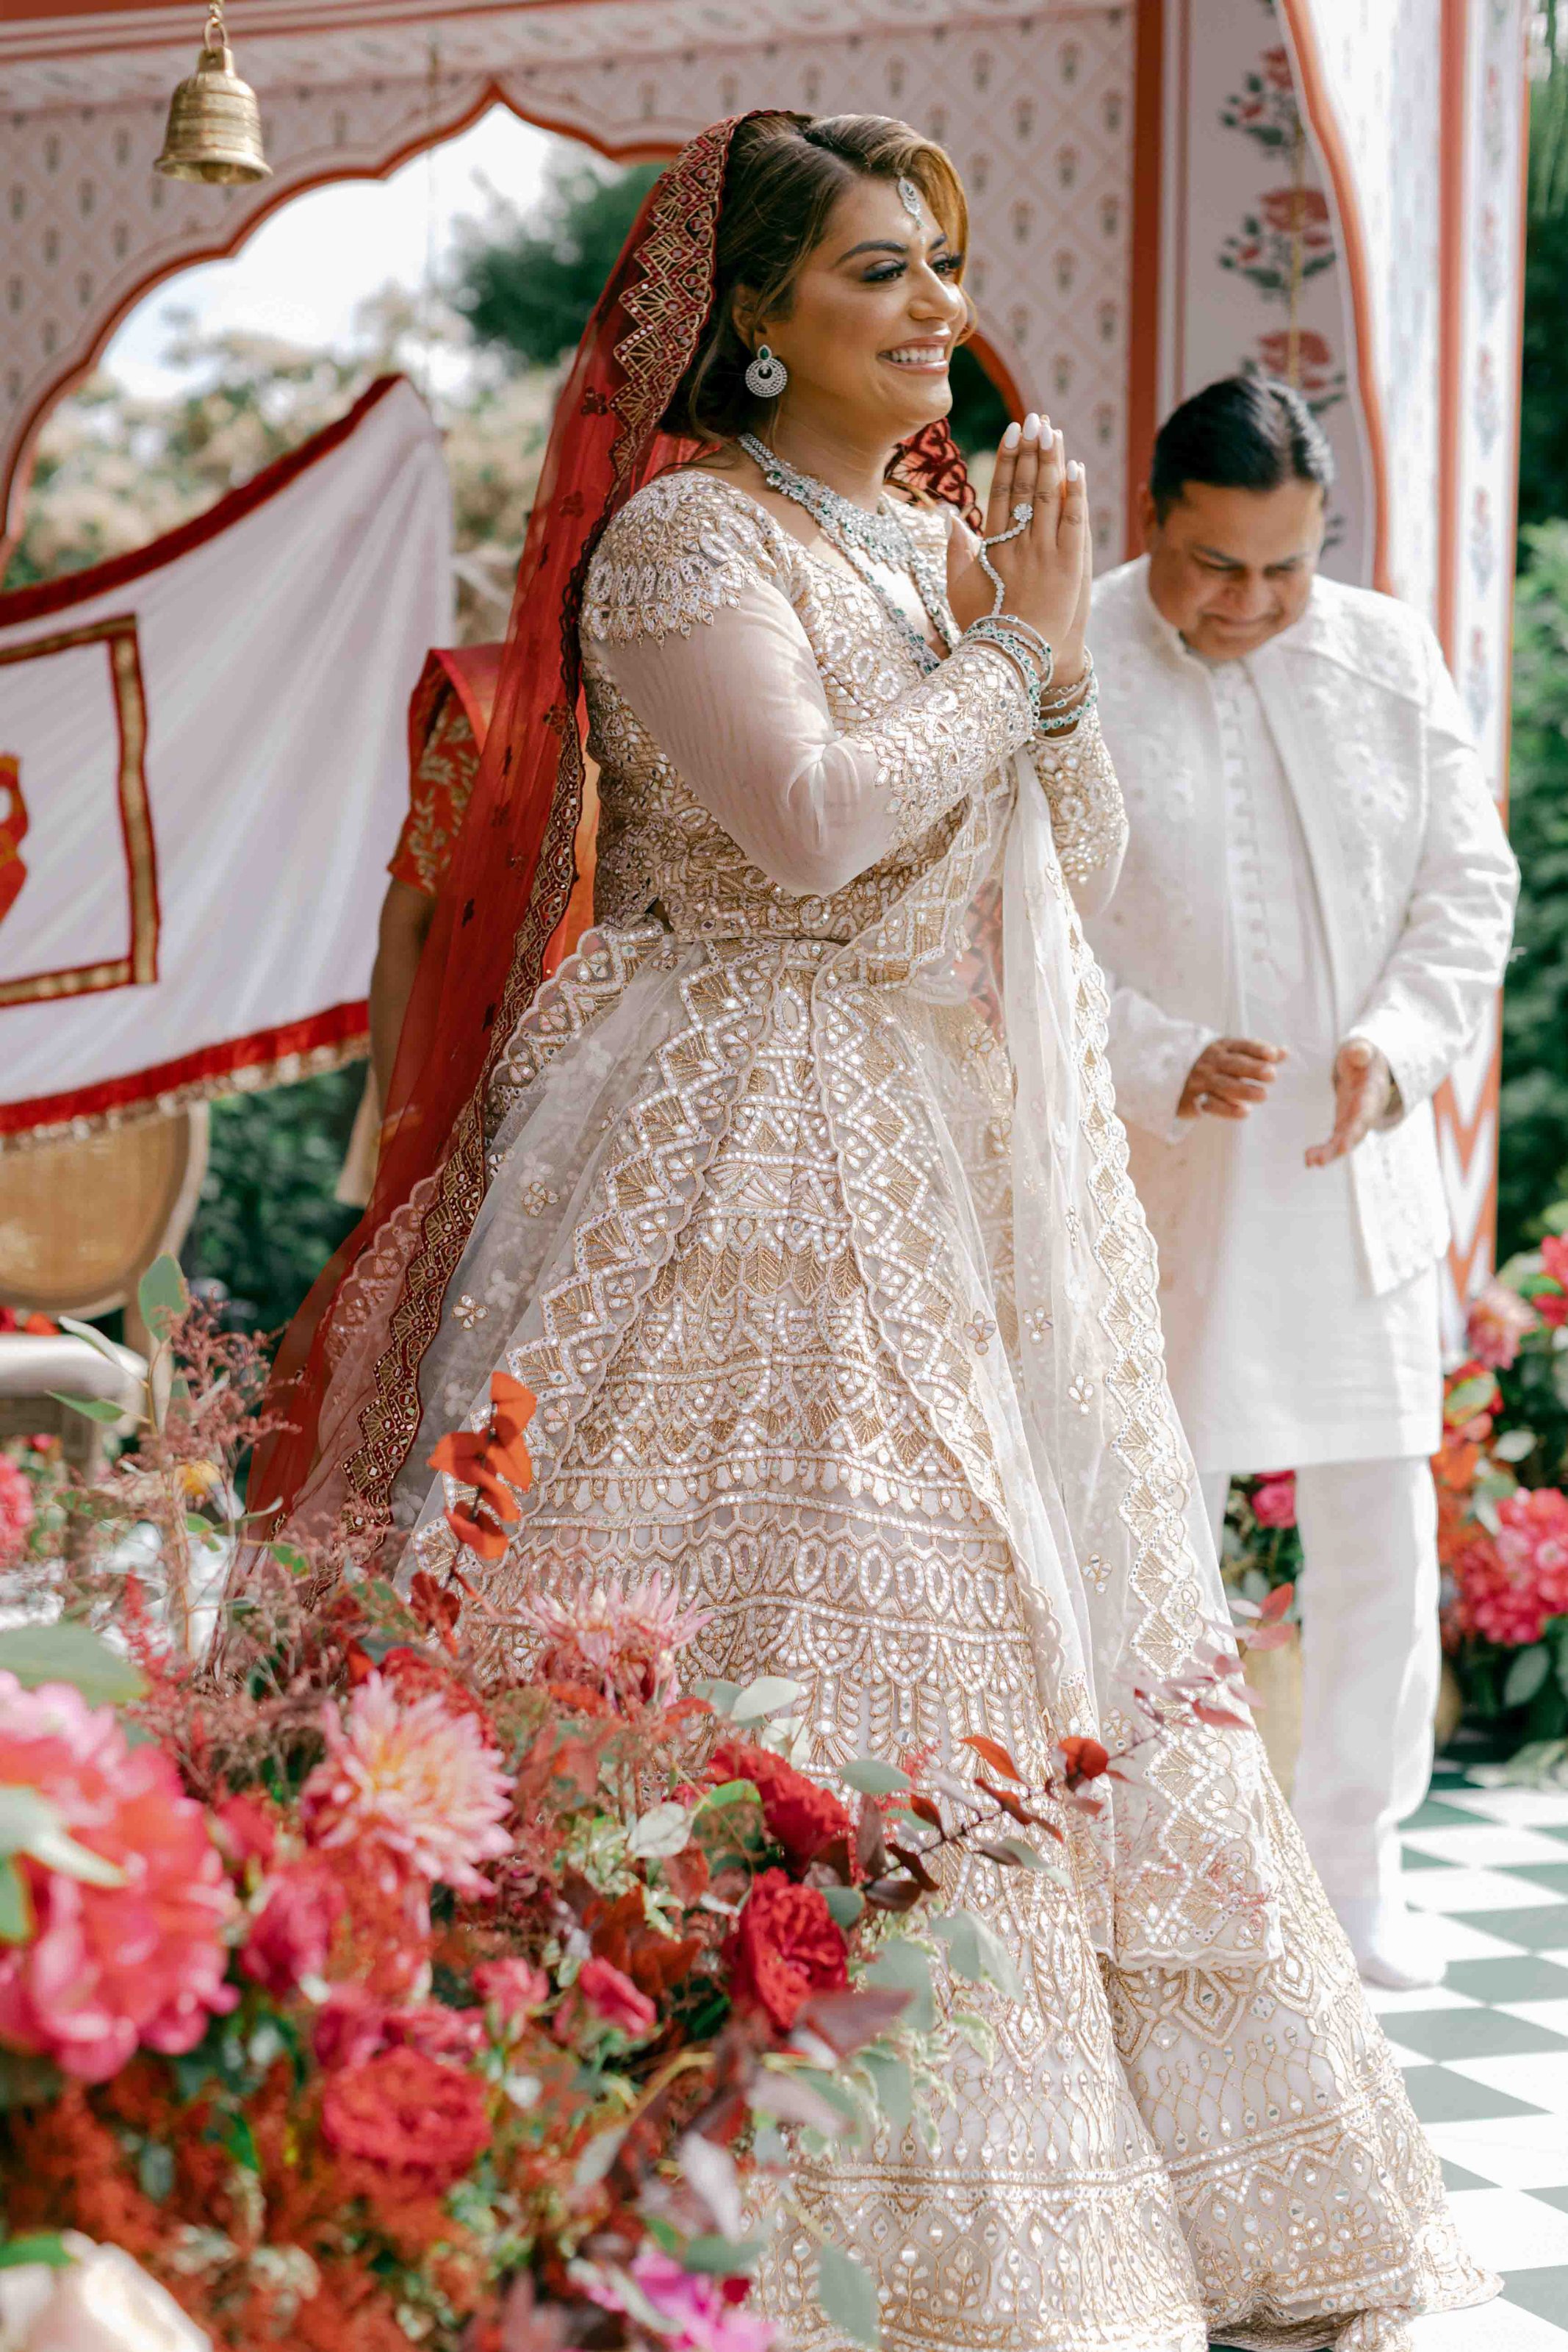  bride praying and facing guests 